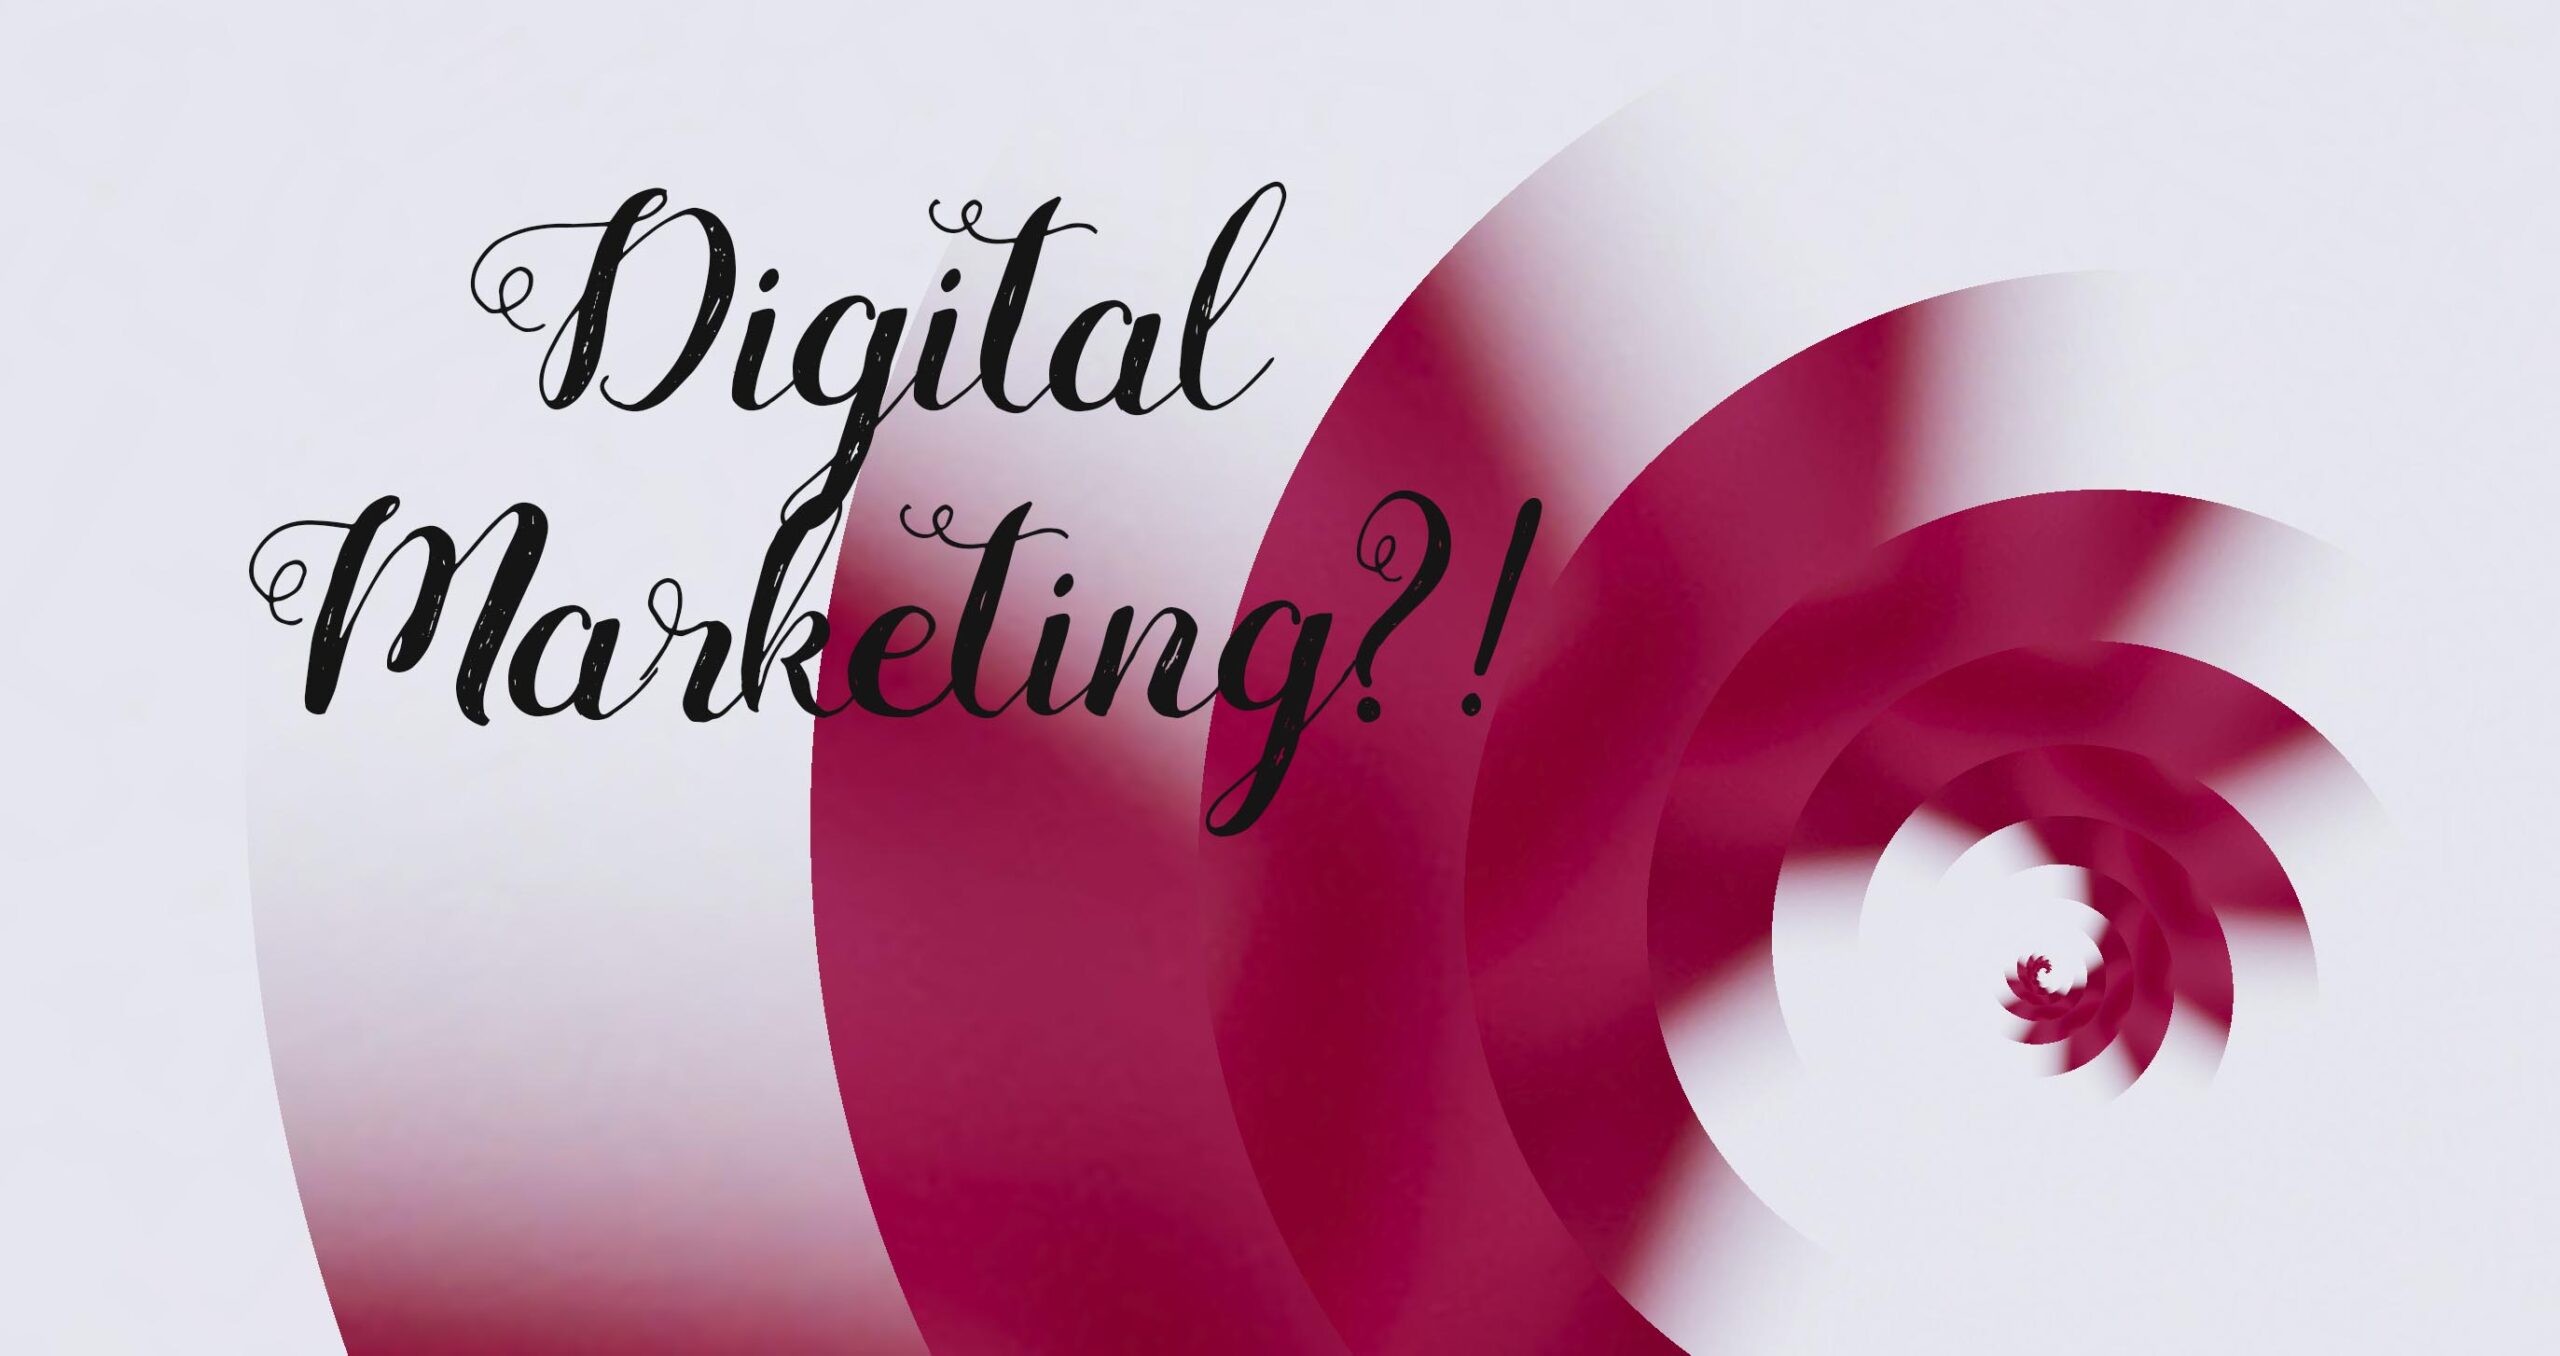 Marketing Quiz: Do You Actually Master Digital Marketing?